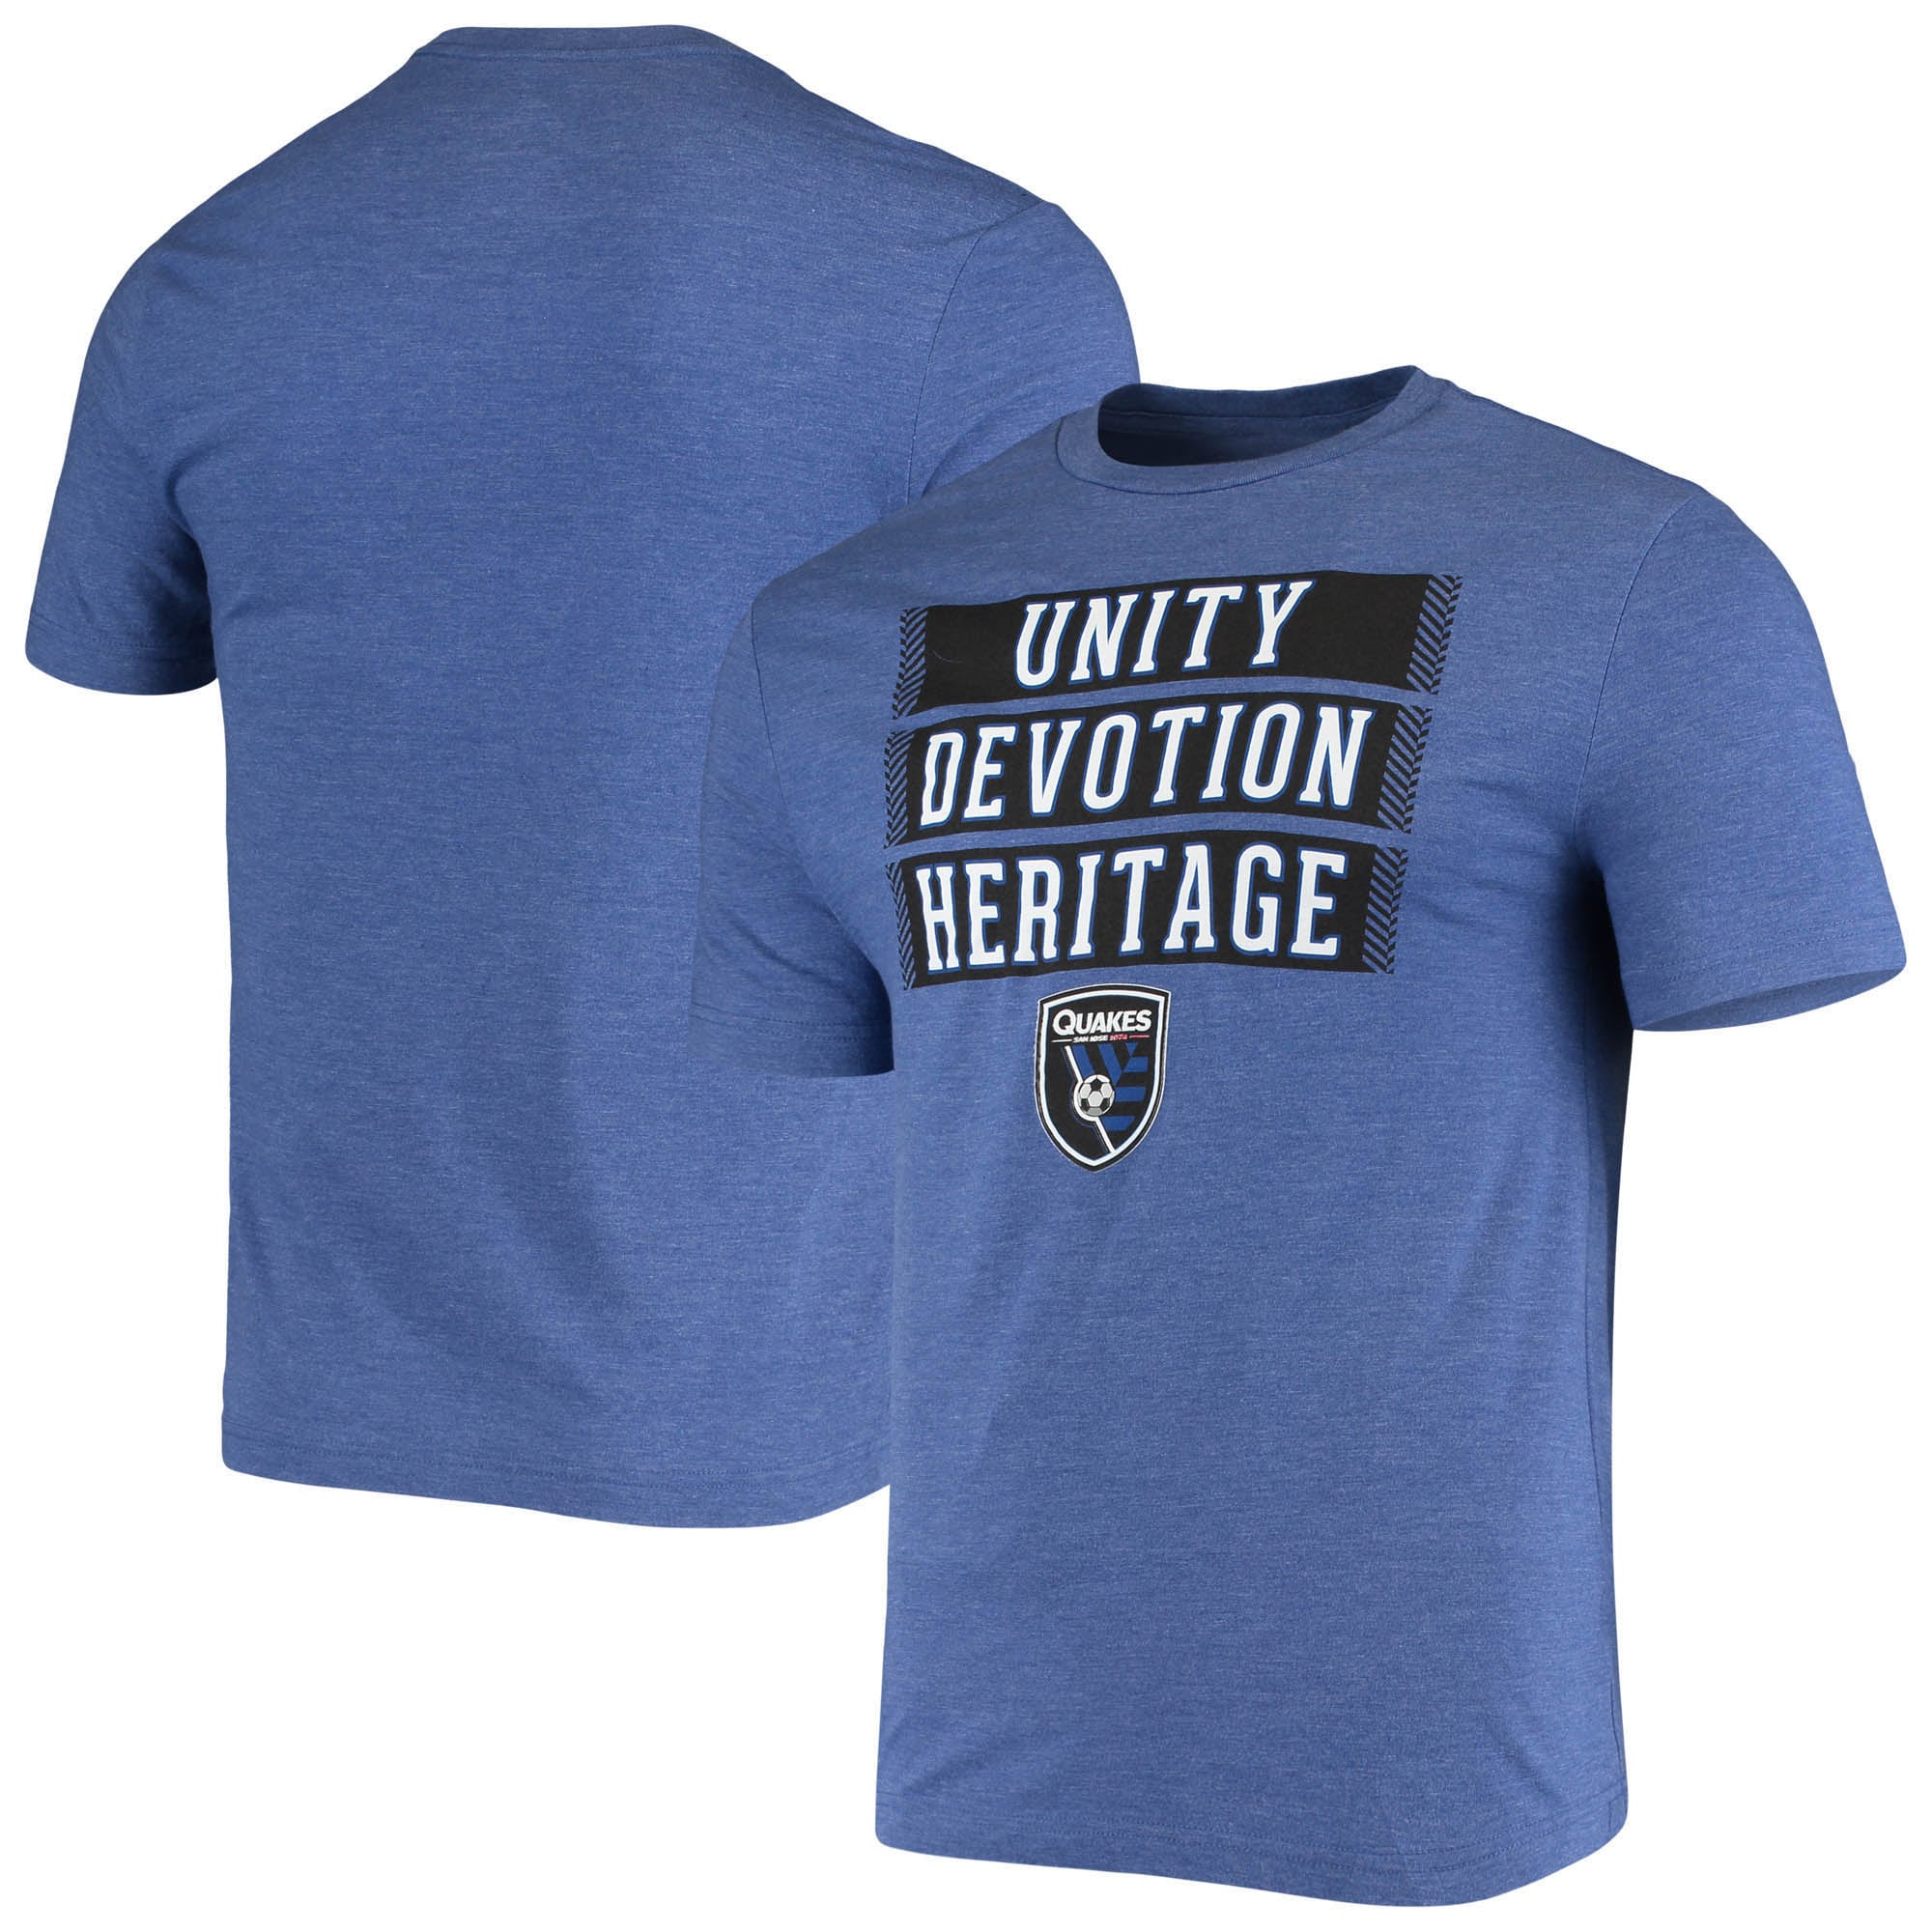 Men's Fanatics Branded Heathered Blue San Jose Earthquakes Three Levels Tri-Blend T-Shirt - image 1 of 3